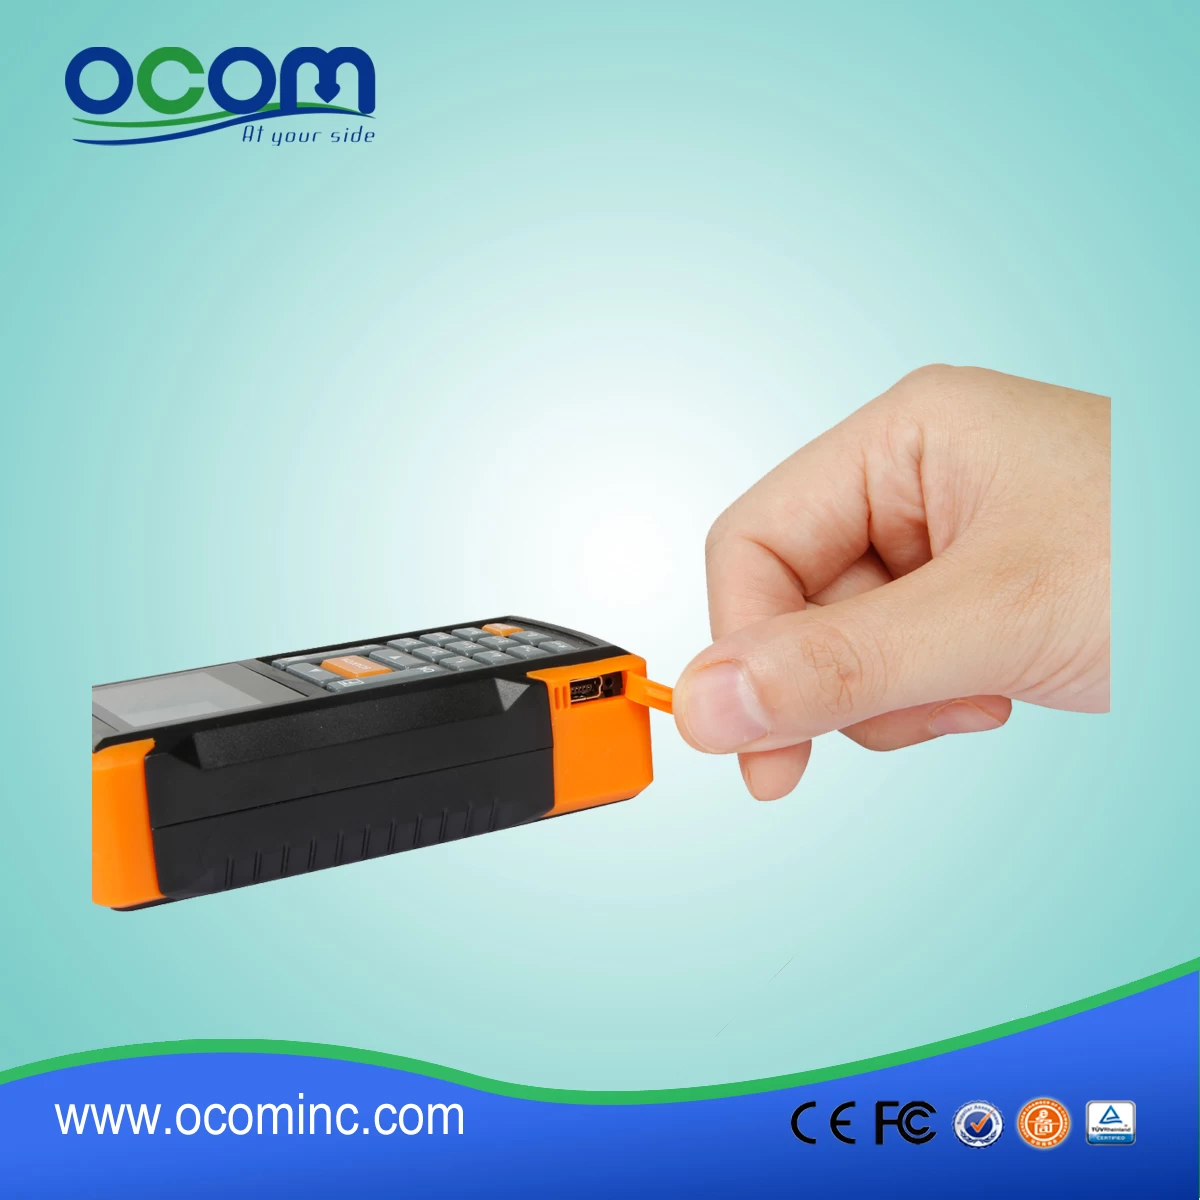 China factory USB Mini Portable Stocktaking Terminal-OCBS-D104